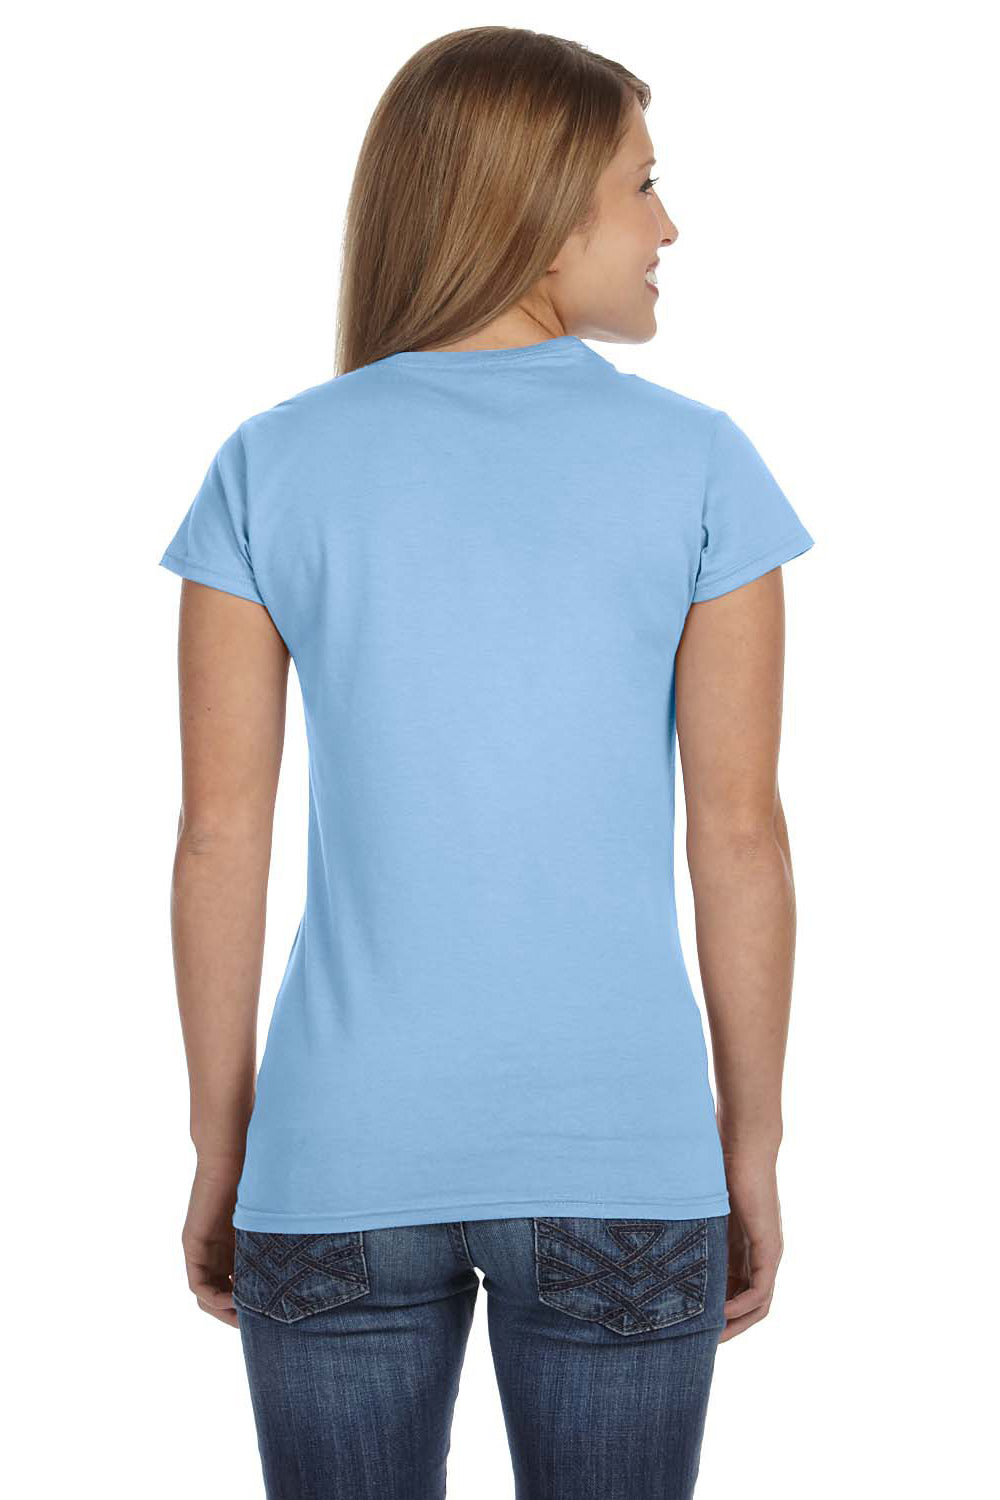 Gildan G640L Womens Softstyle Short Sleeve Crewneck T-Shirt Light Blue Back